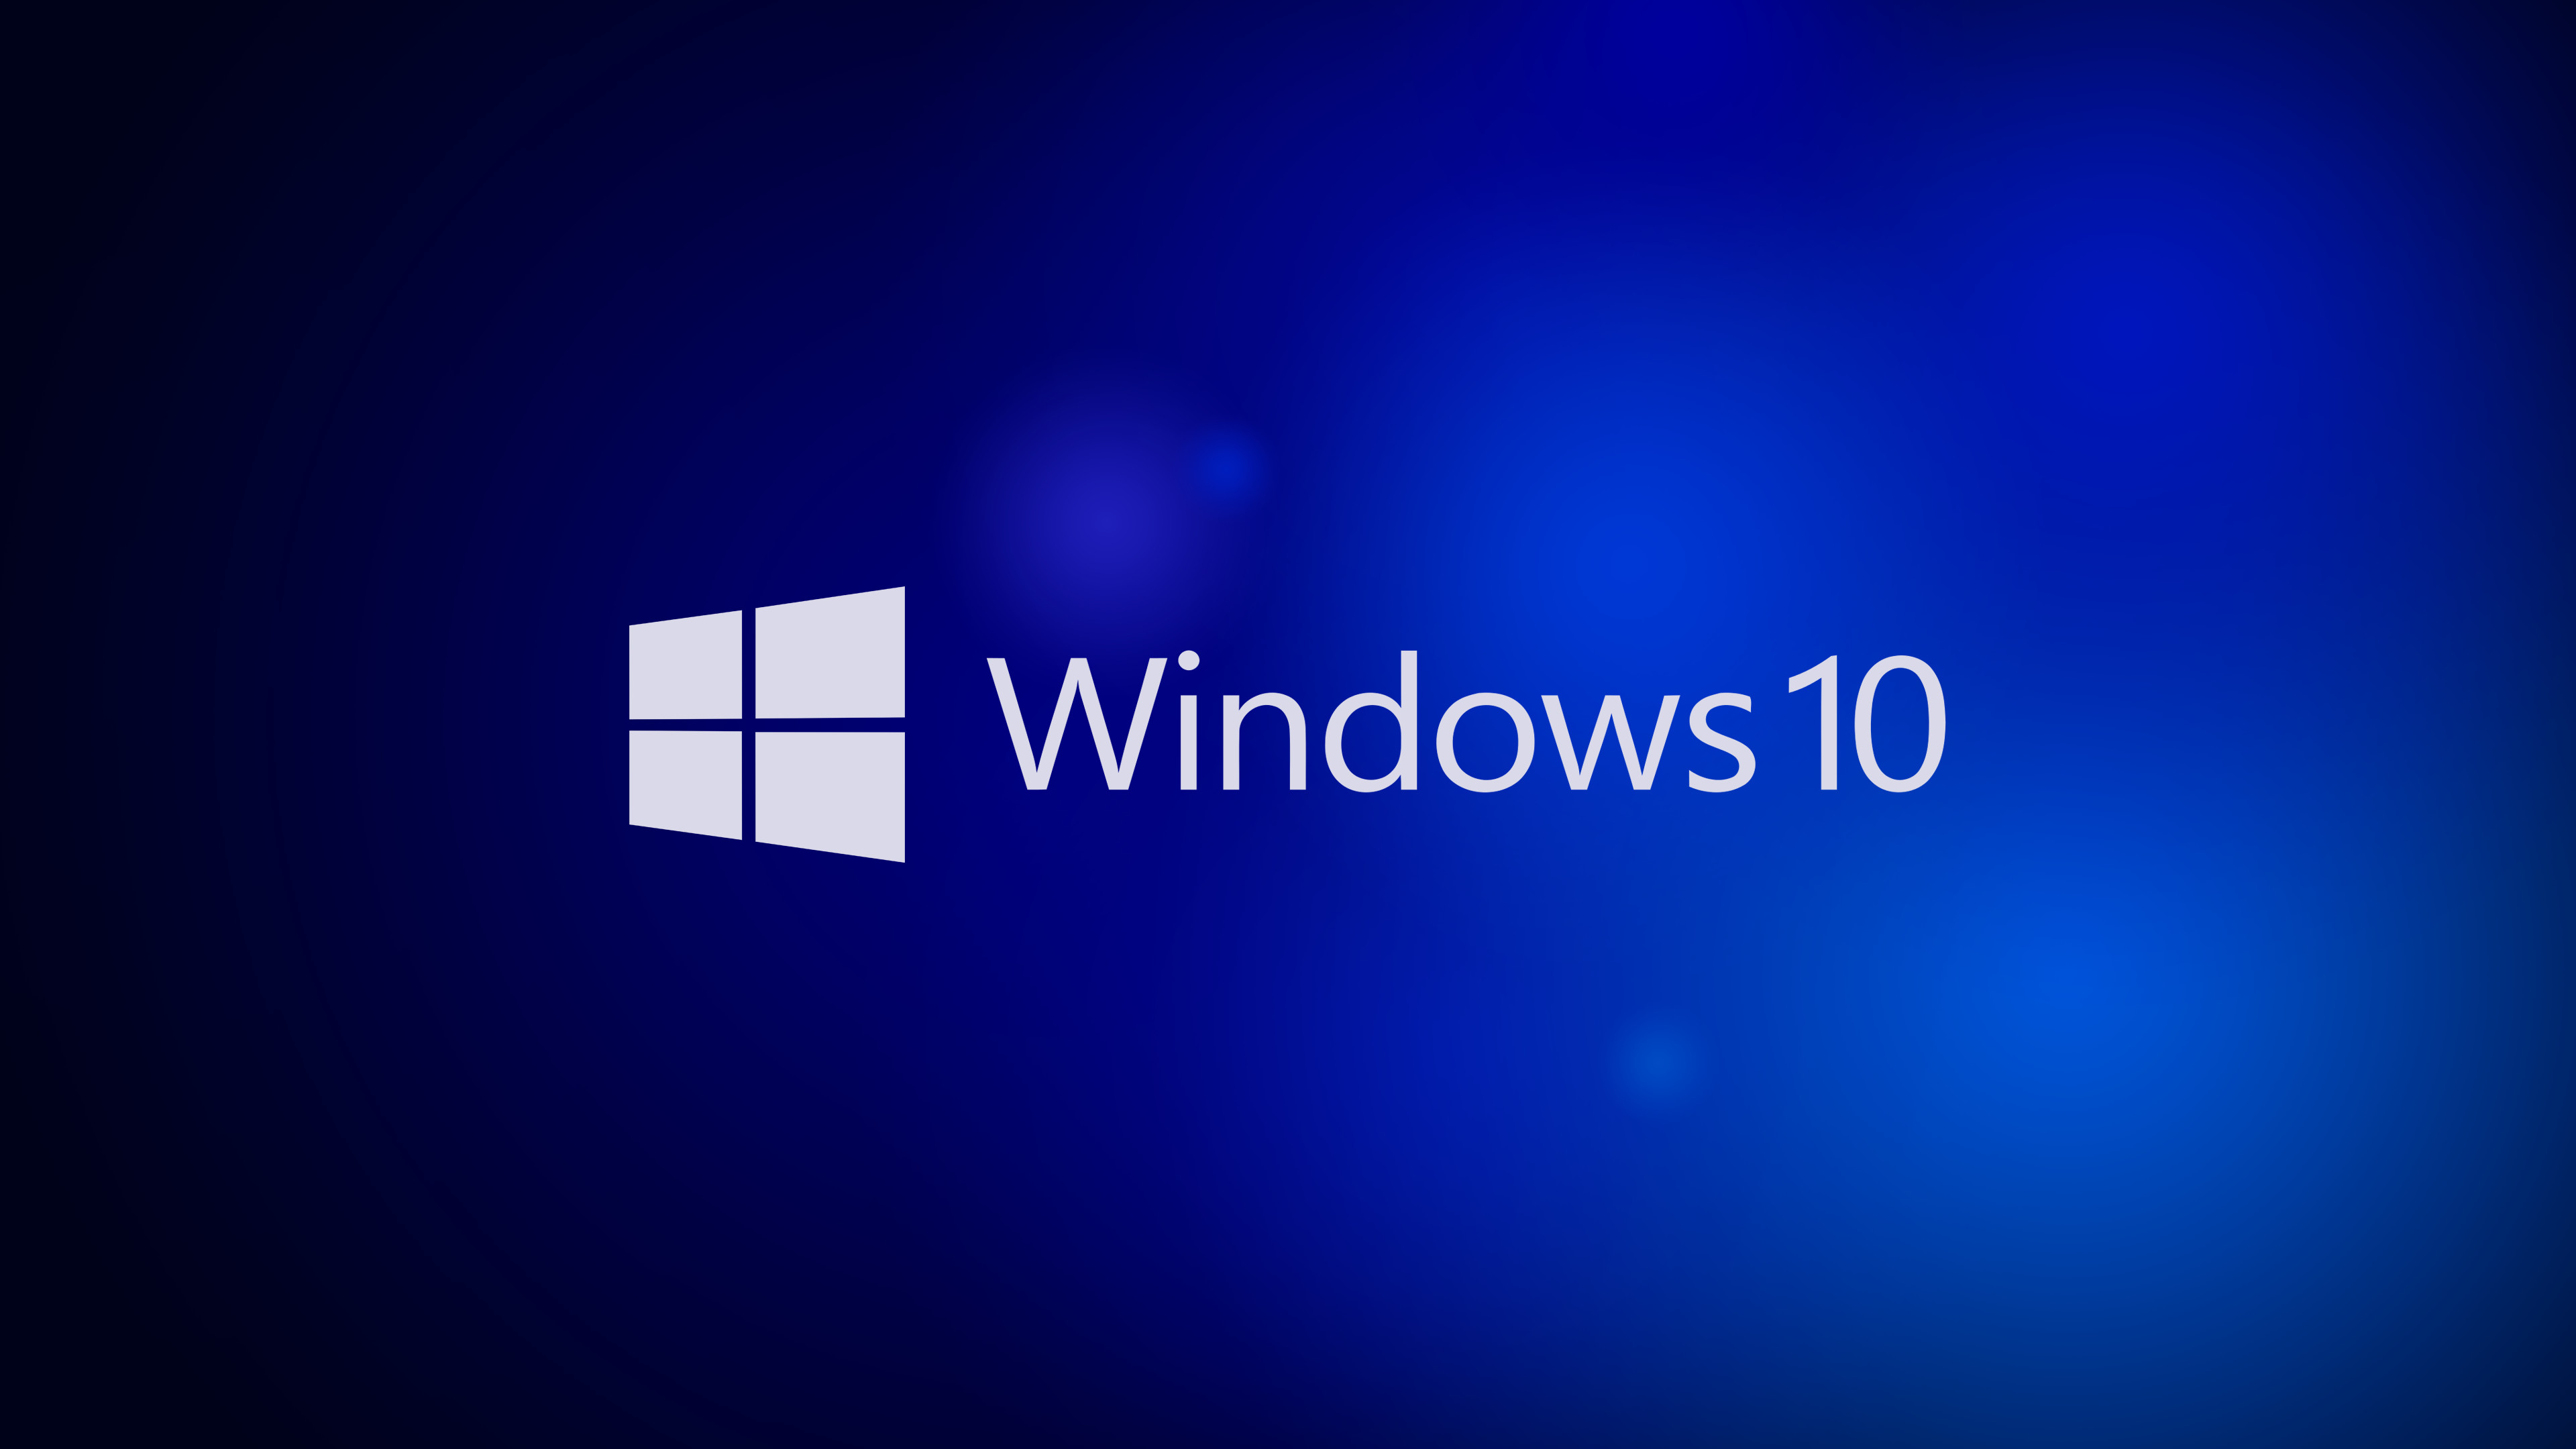 3840x2160 Windows 10 4K Wallpaper by RV770 Windows 10 4K Wallpaper by RV770